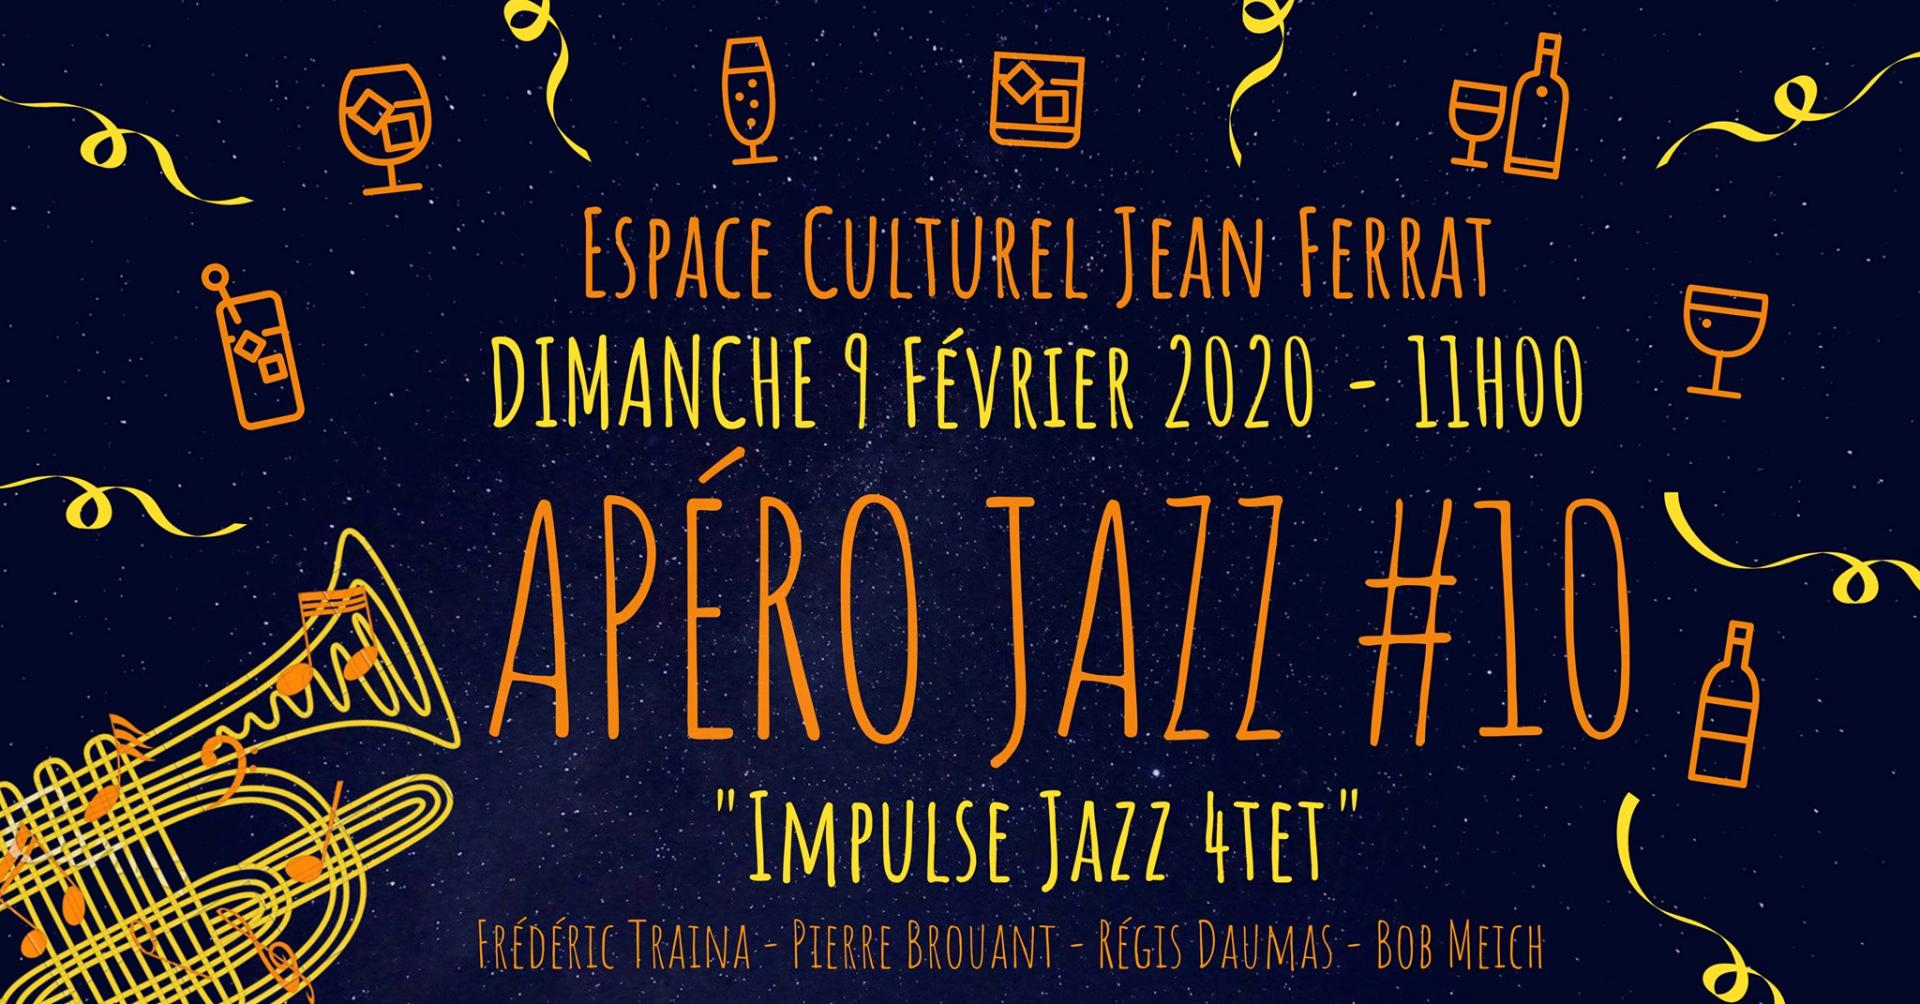 Apéro Jazz #10 - Impulse Jazz 4tet